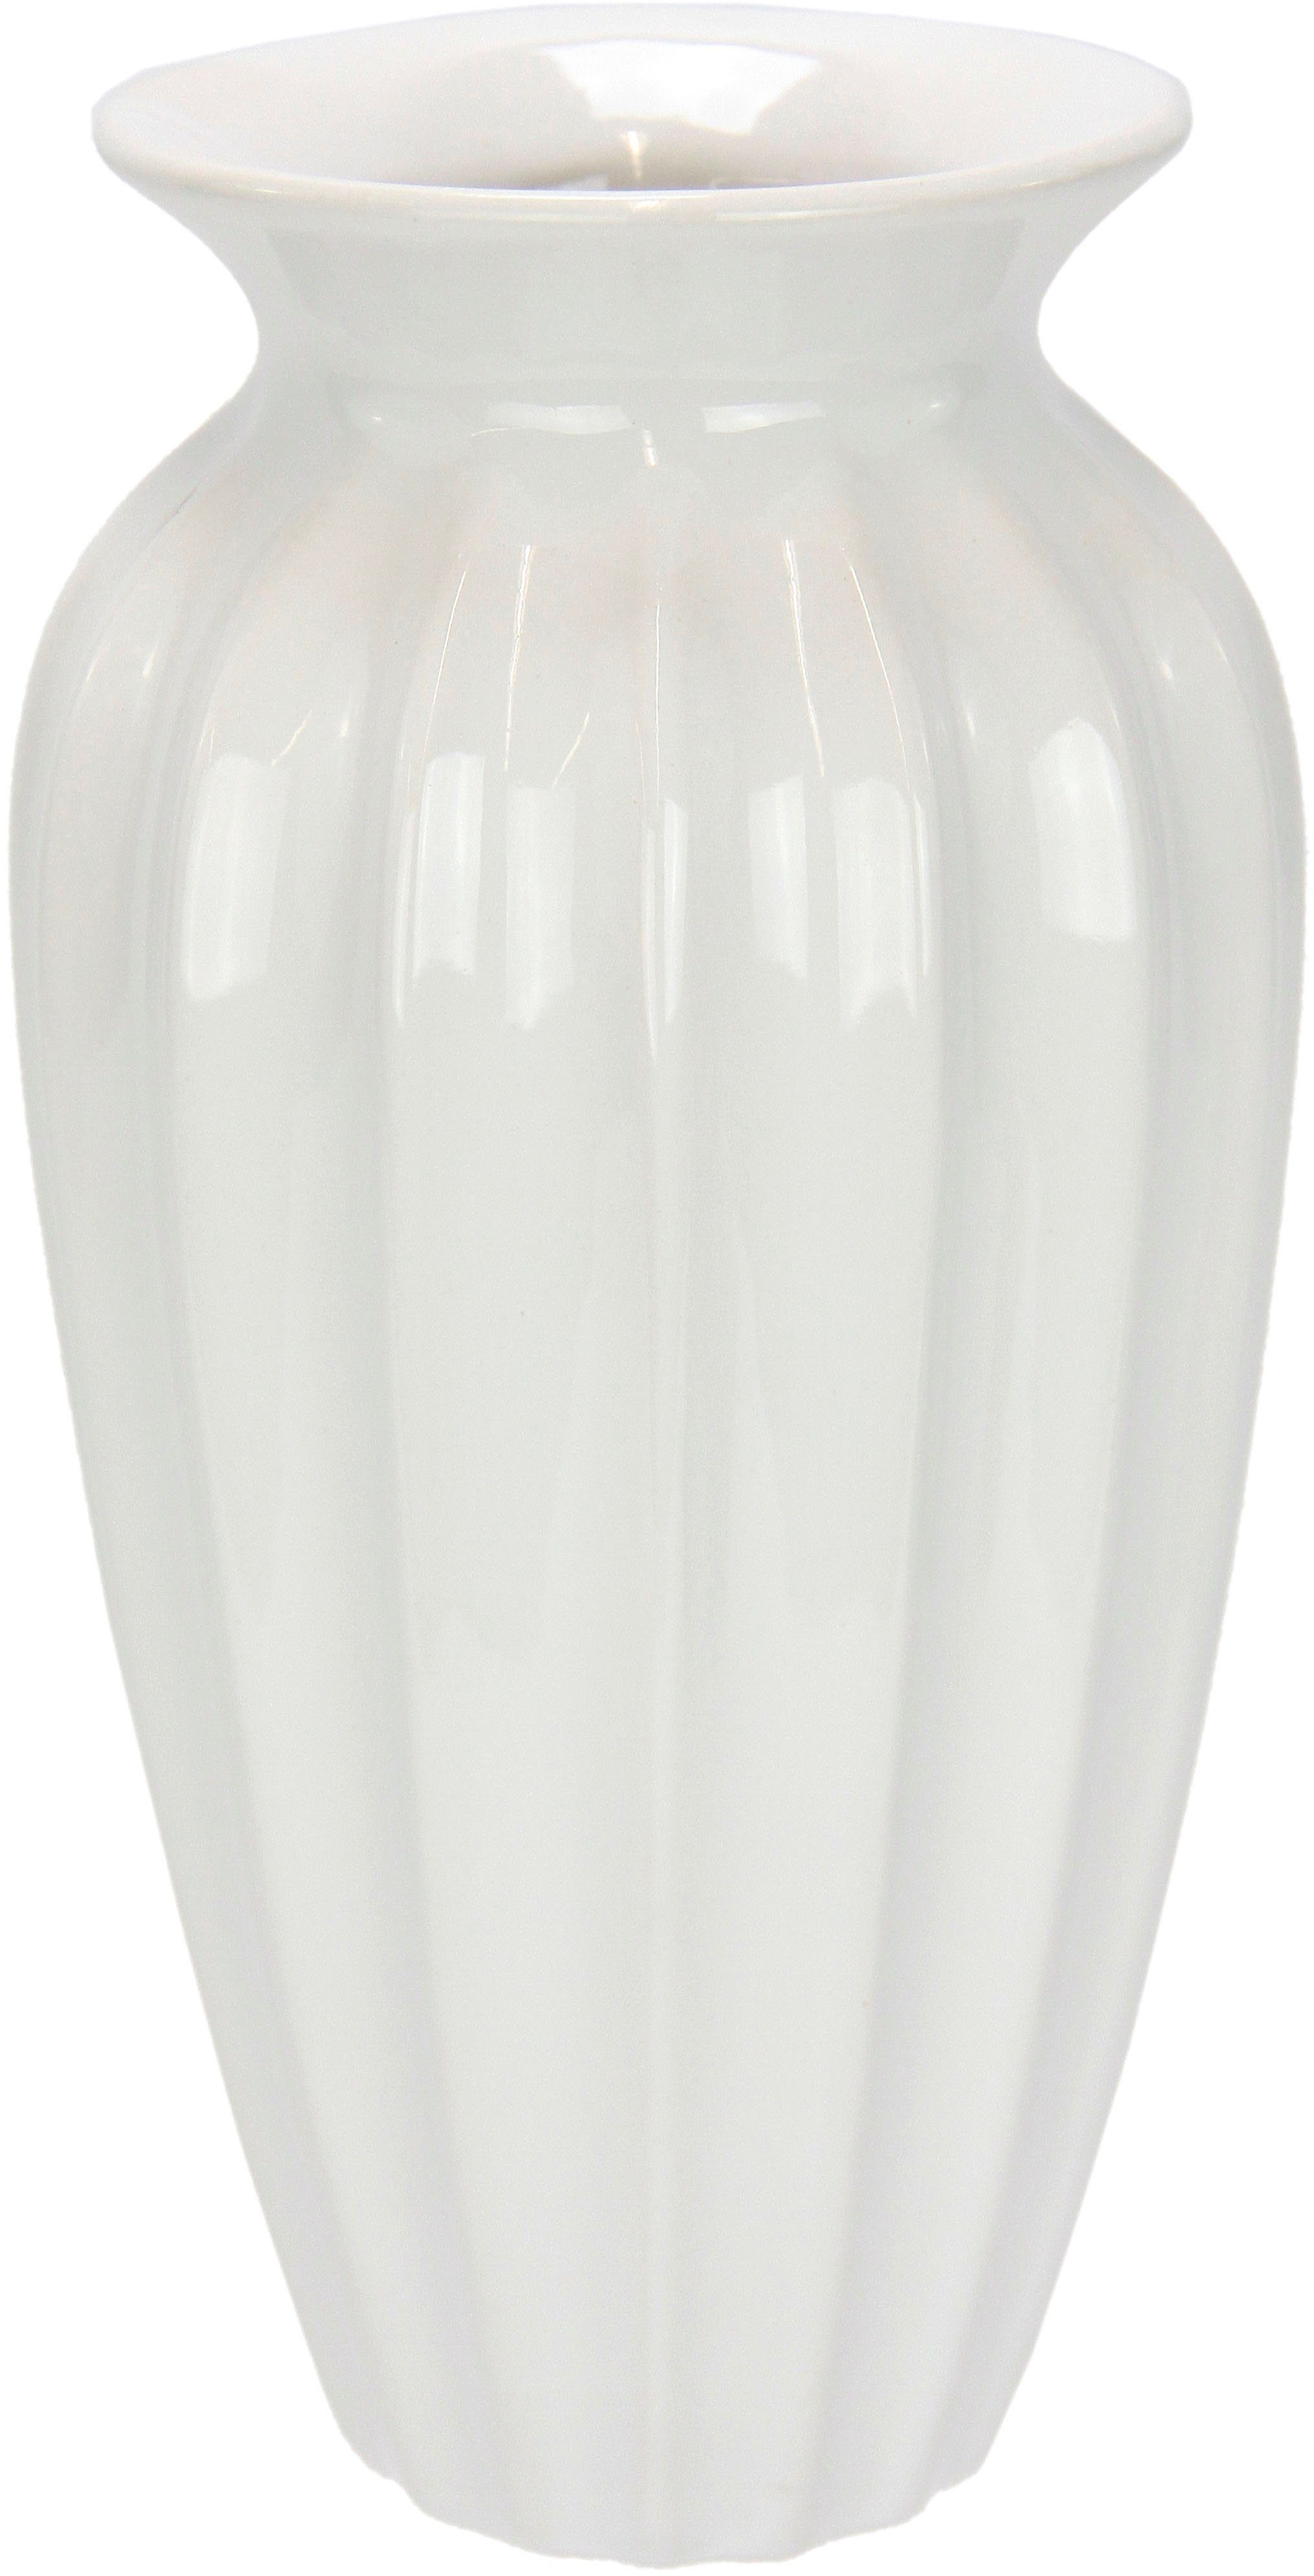 I.GE.A. Dekovase Keramik Vase, Aus Keramik, groß rund